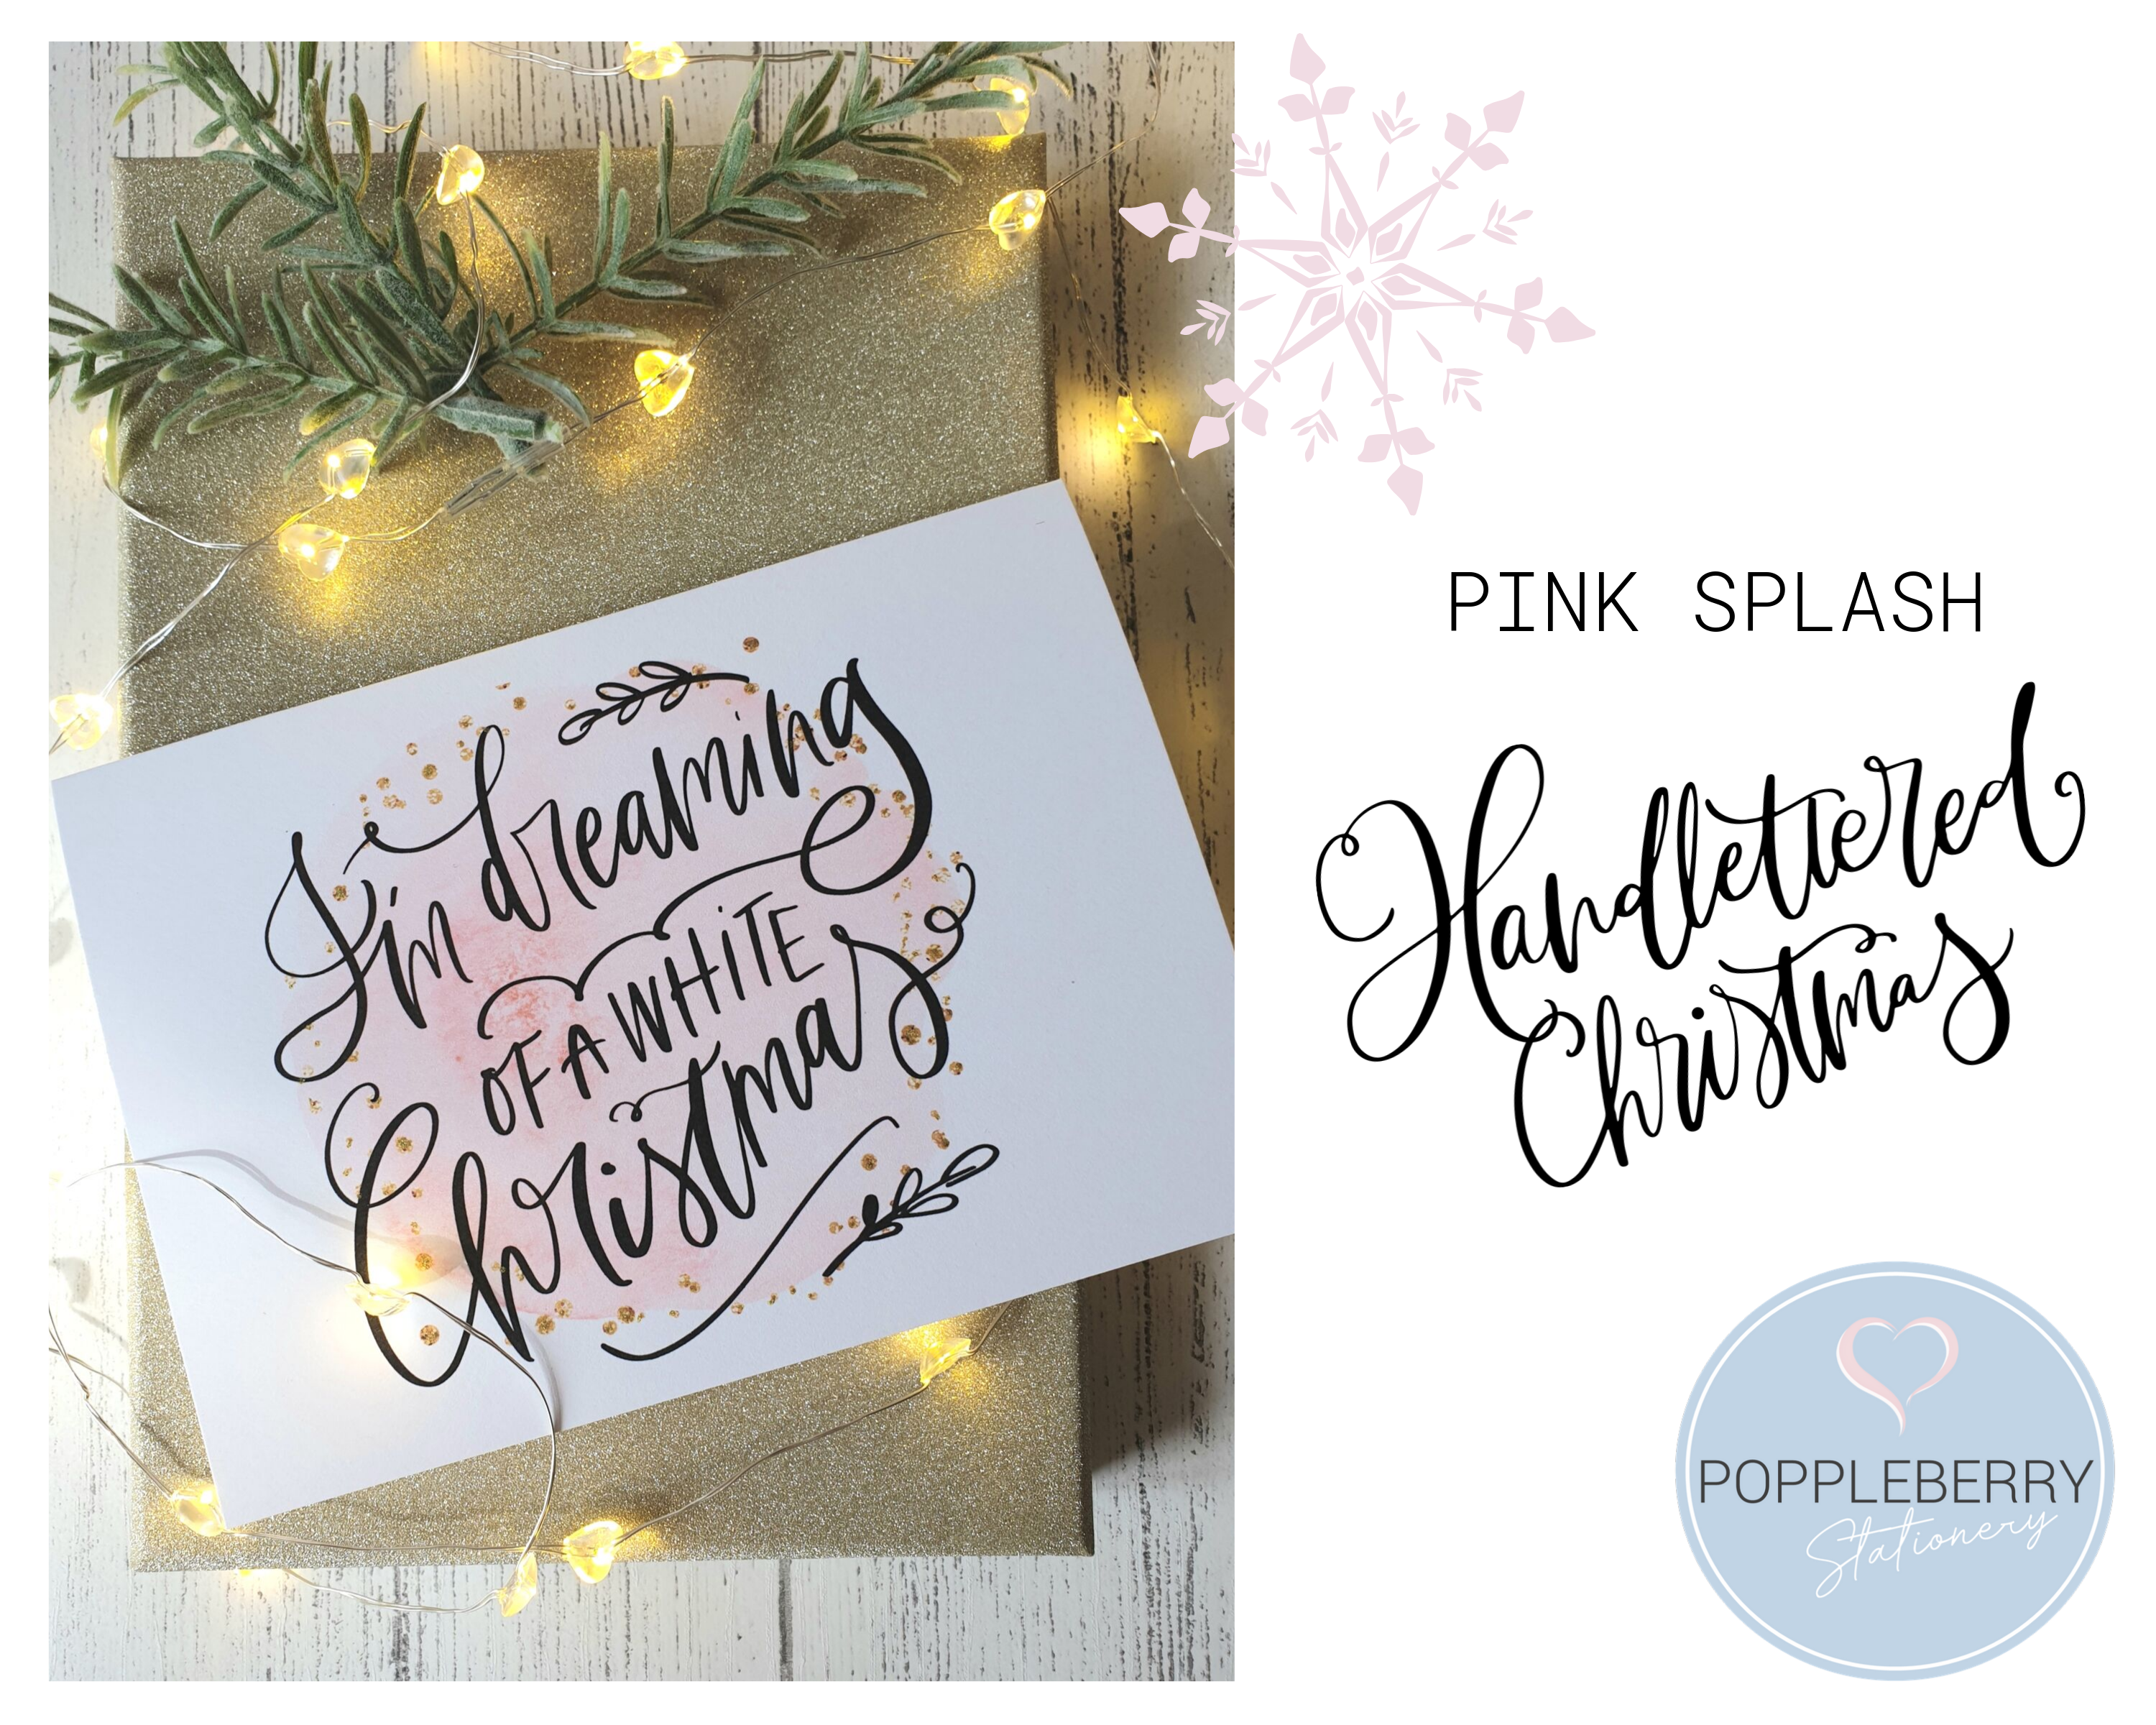 Poppleberry A6 'White Christmas' Modern Pink Watercolour Splash Christmas Card with Gold Sparkle Glitter.